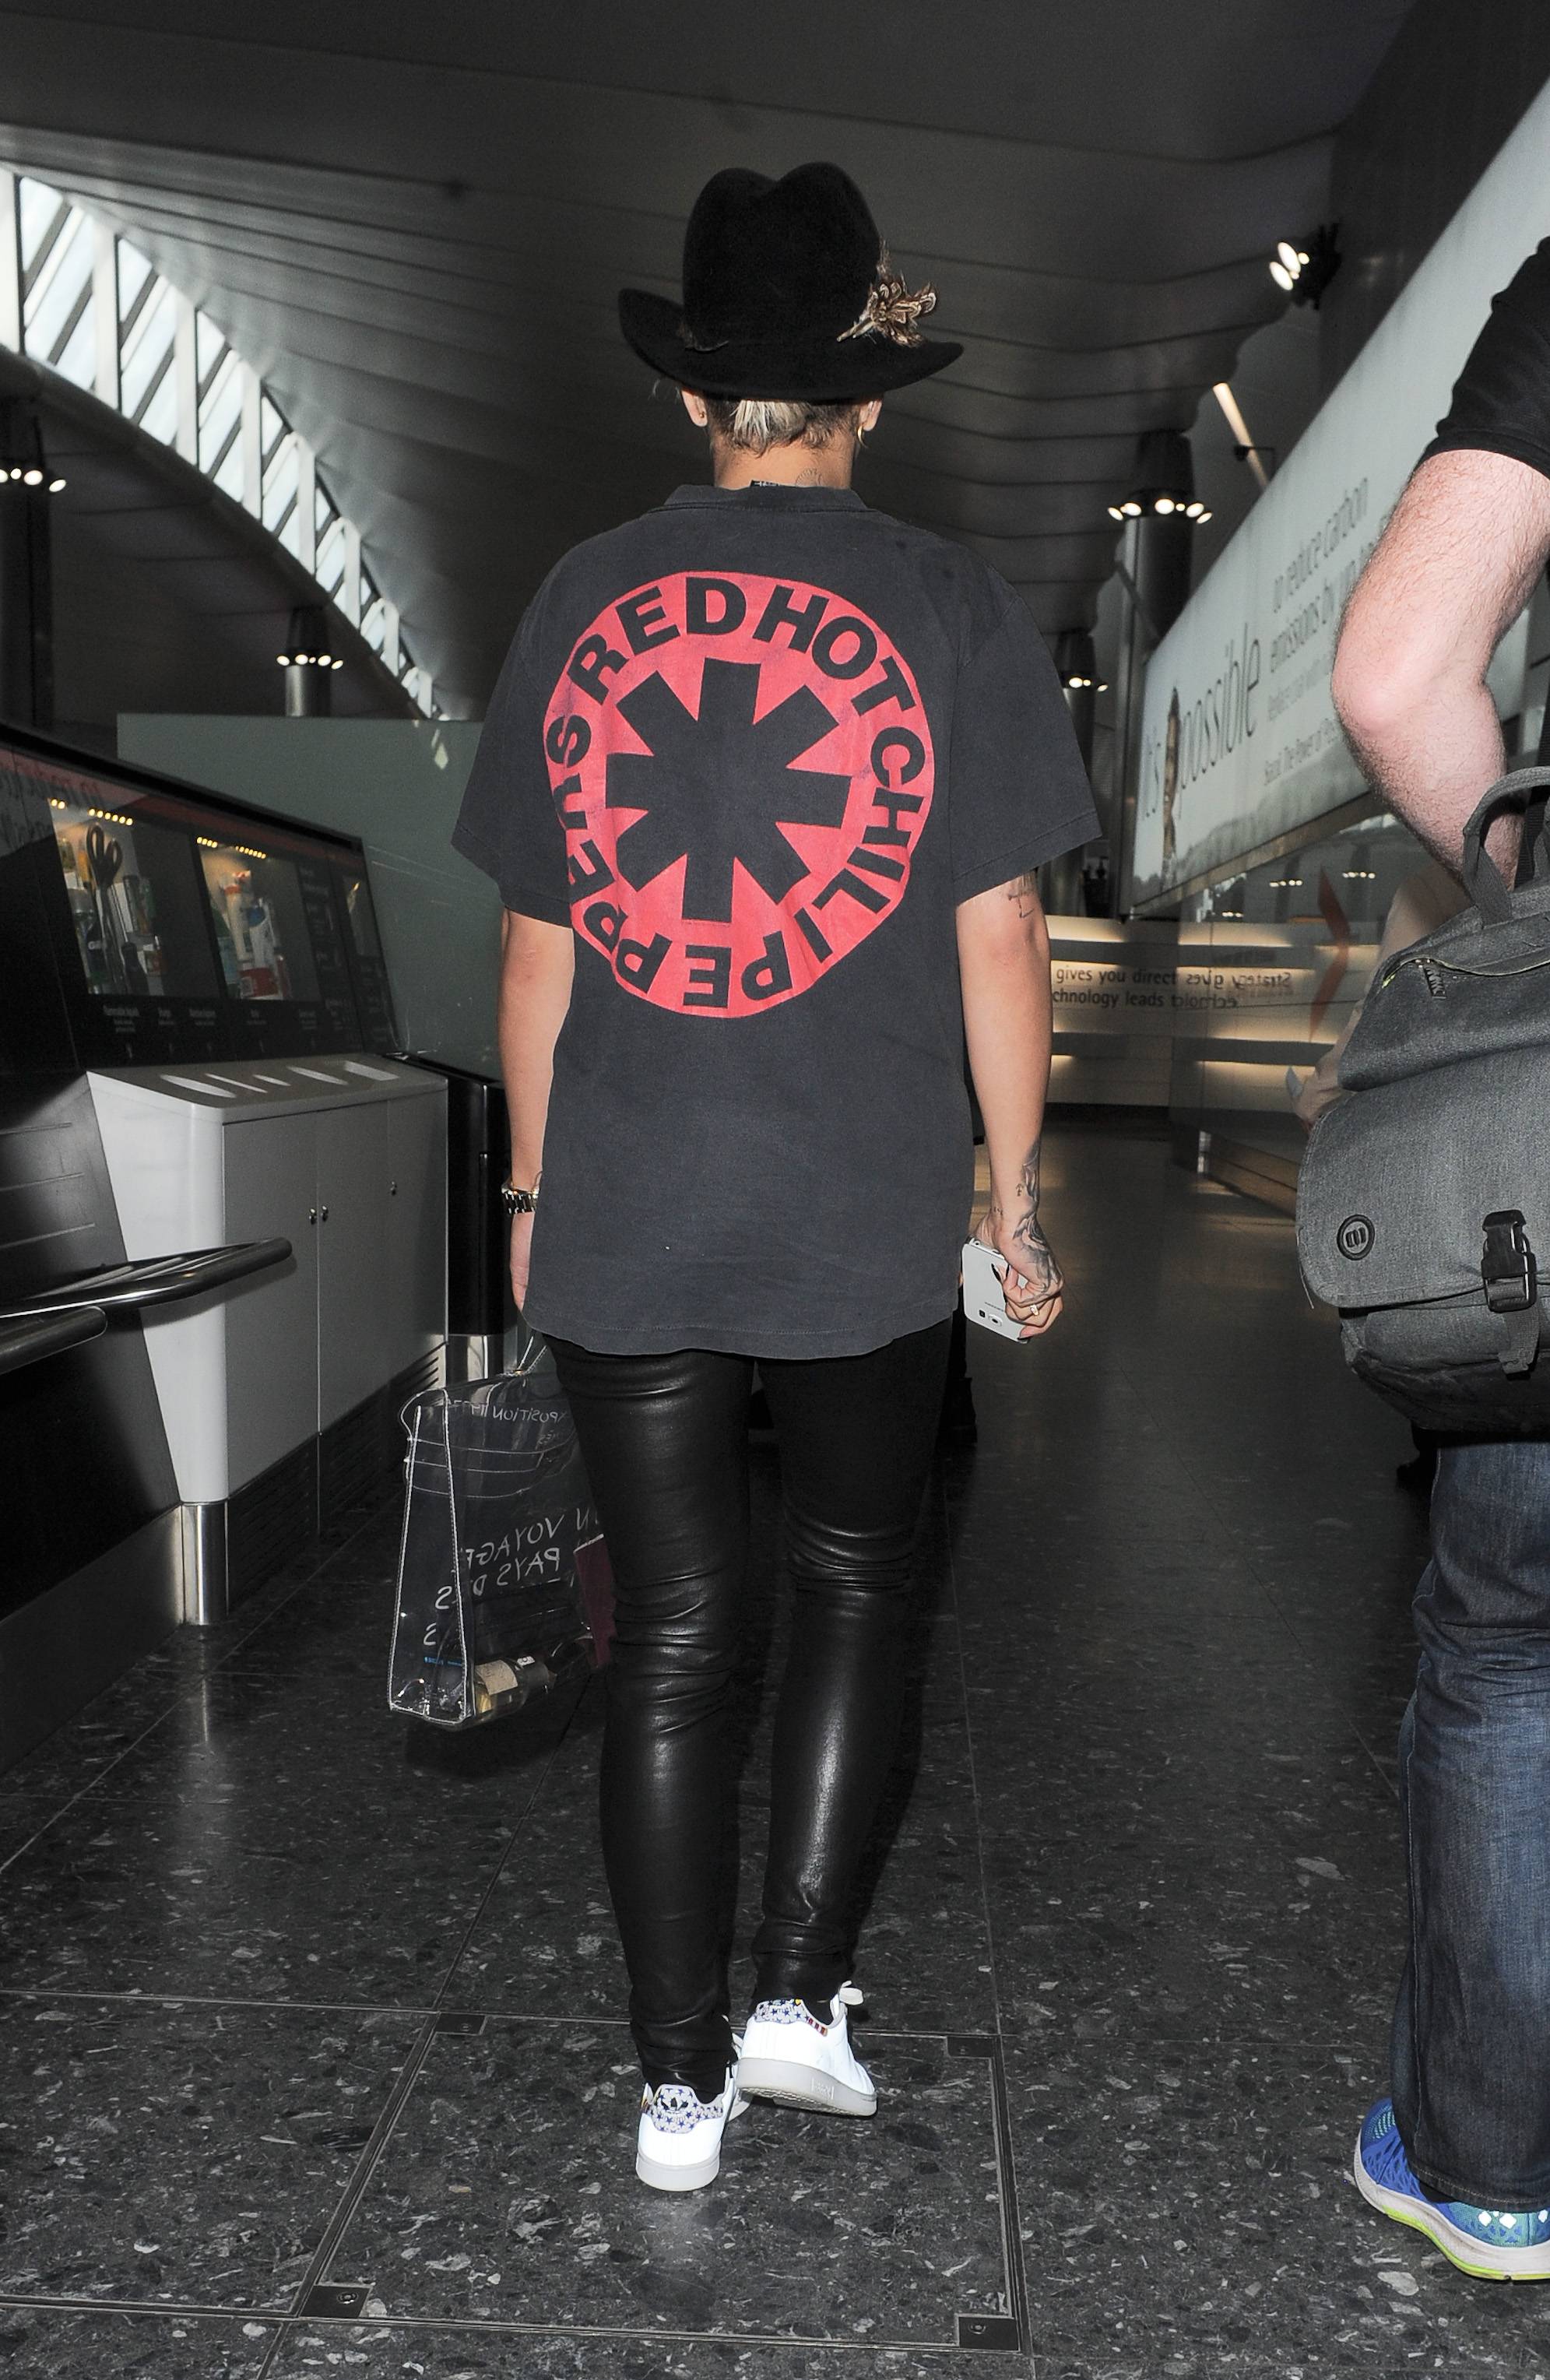 Rita Ora arriving at Heathrow airport